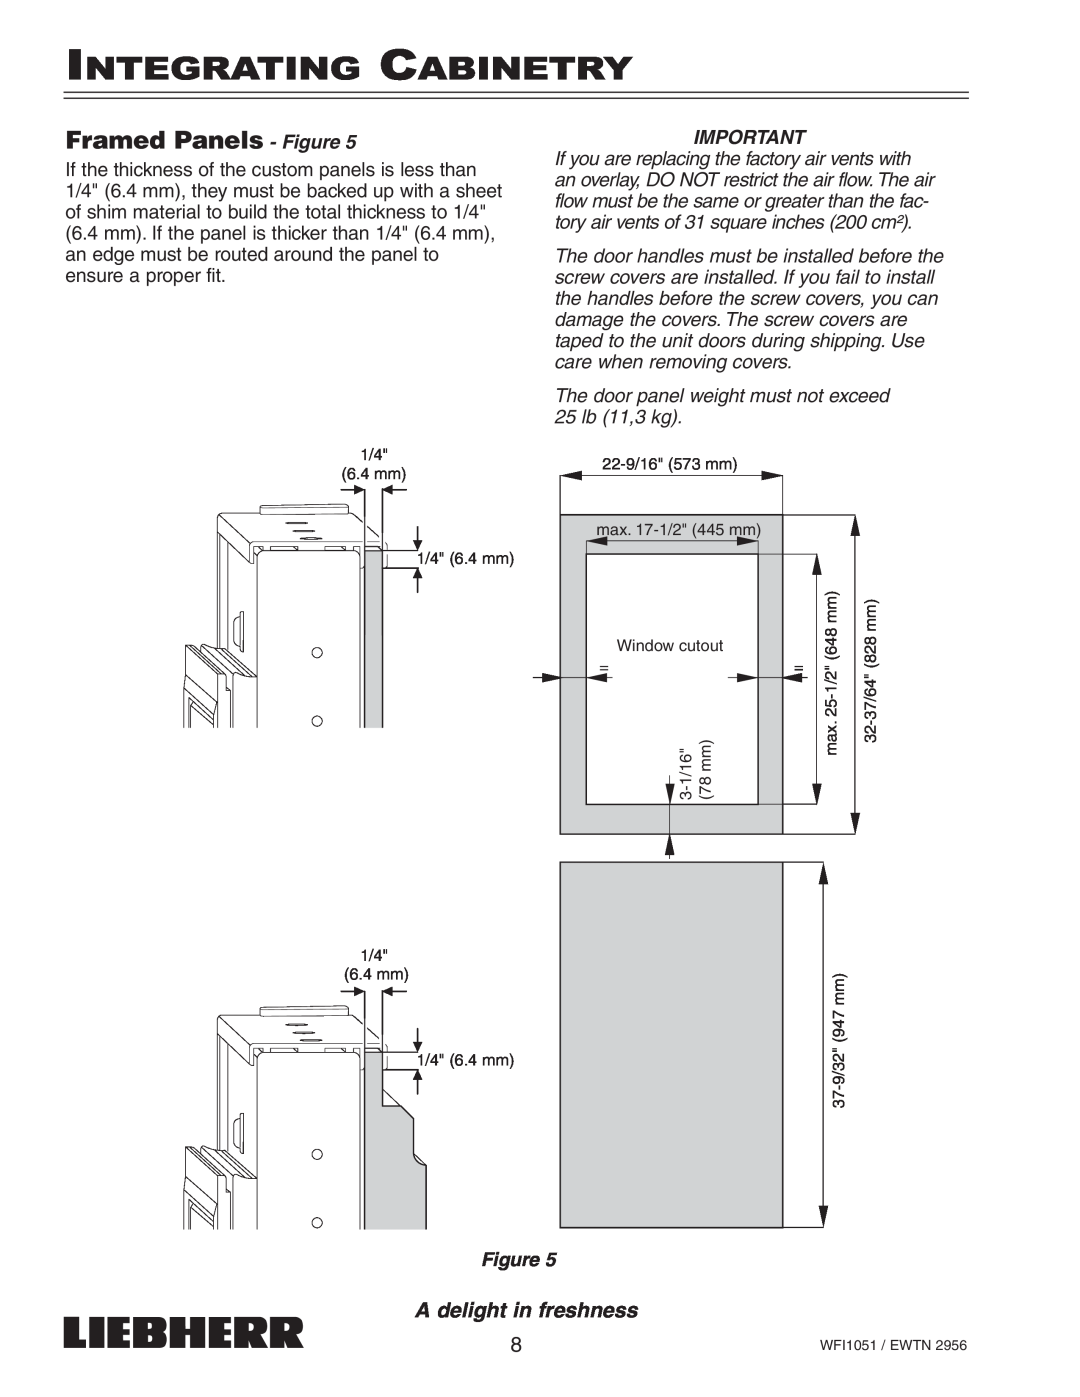 Liebherr EWTN installation instructions Integrating Cabinetry, Framed Panels - Figure, A delight in freshness 